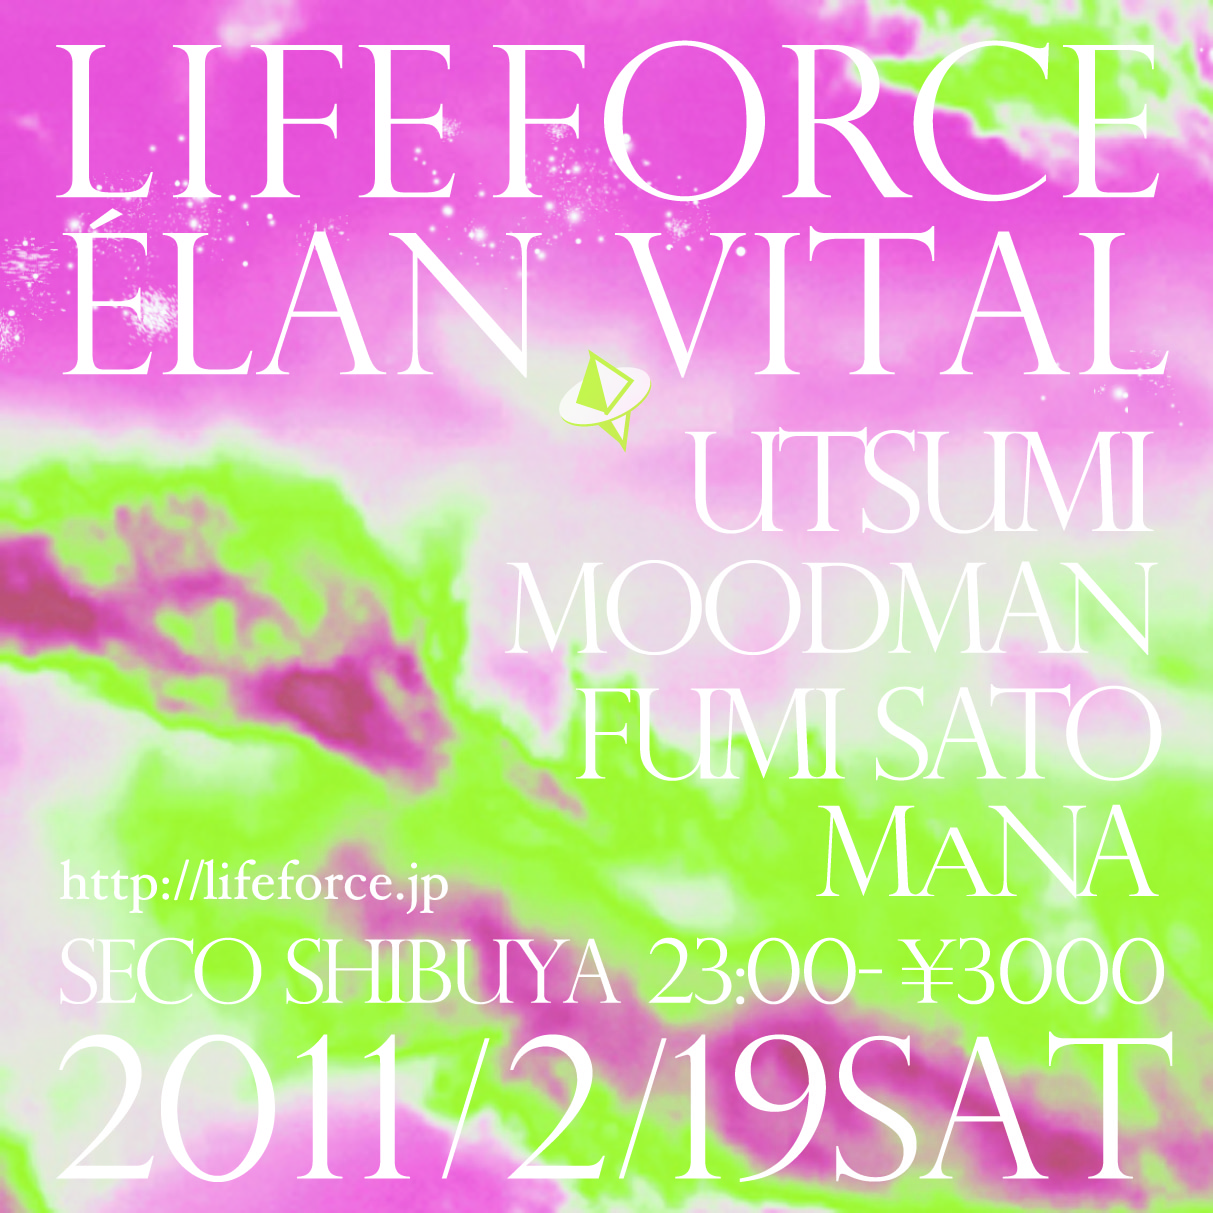 2/19 Life Force Elan Vital @Seco